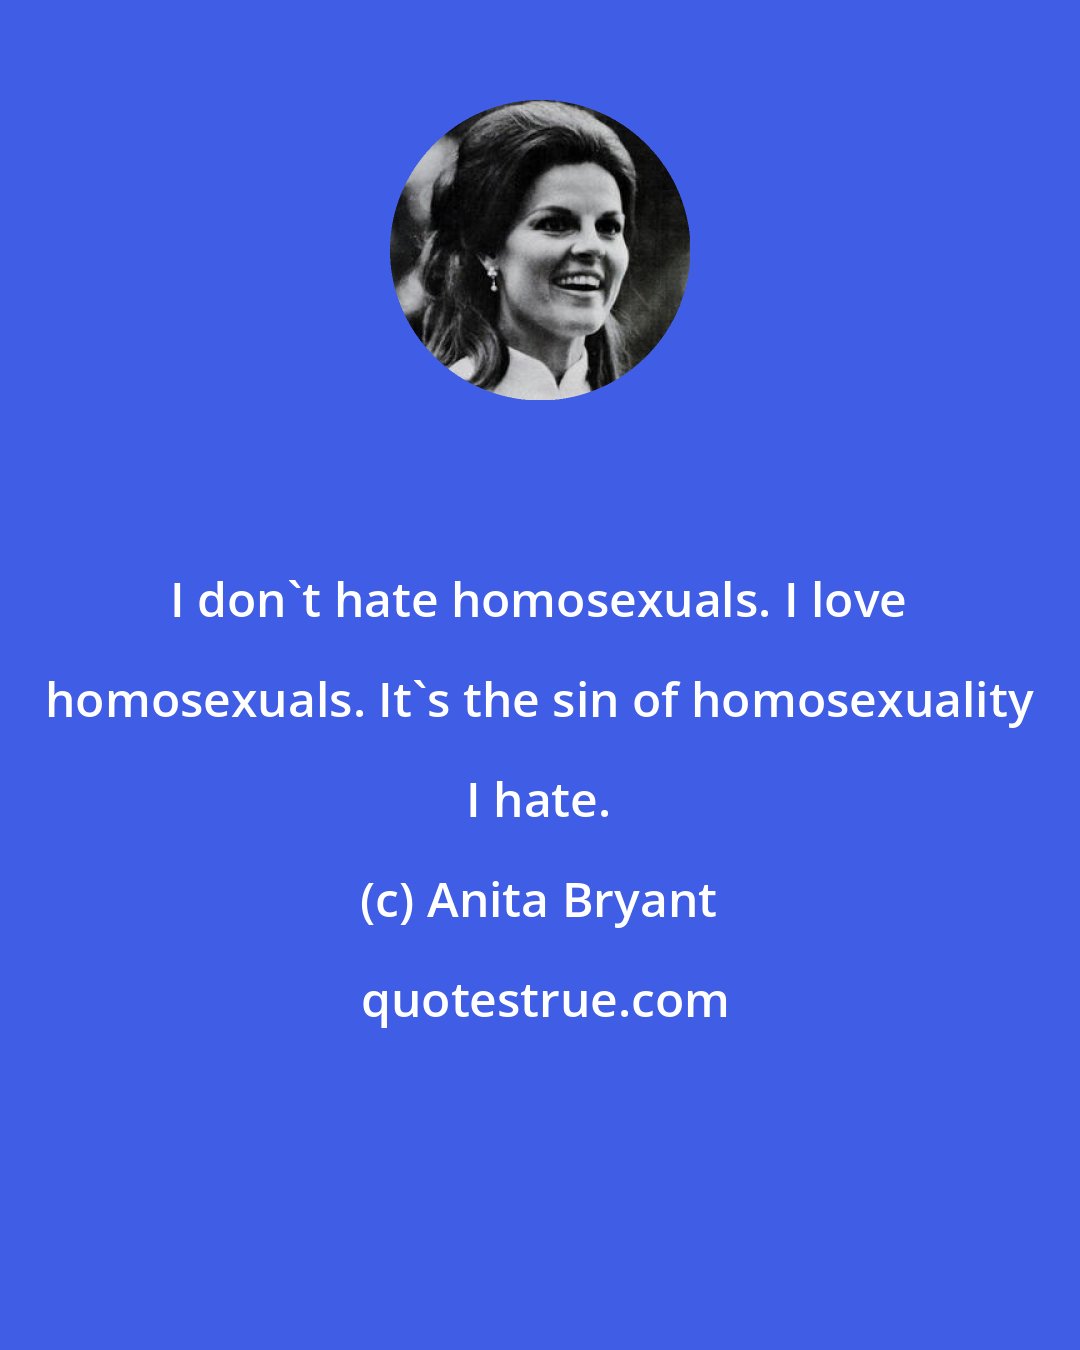 Anita Bryant: I don't hate homosexuals. I love homosexuals. It's the sin of homosexuality I hate.